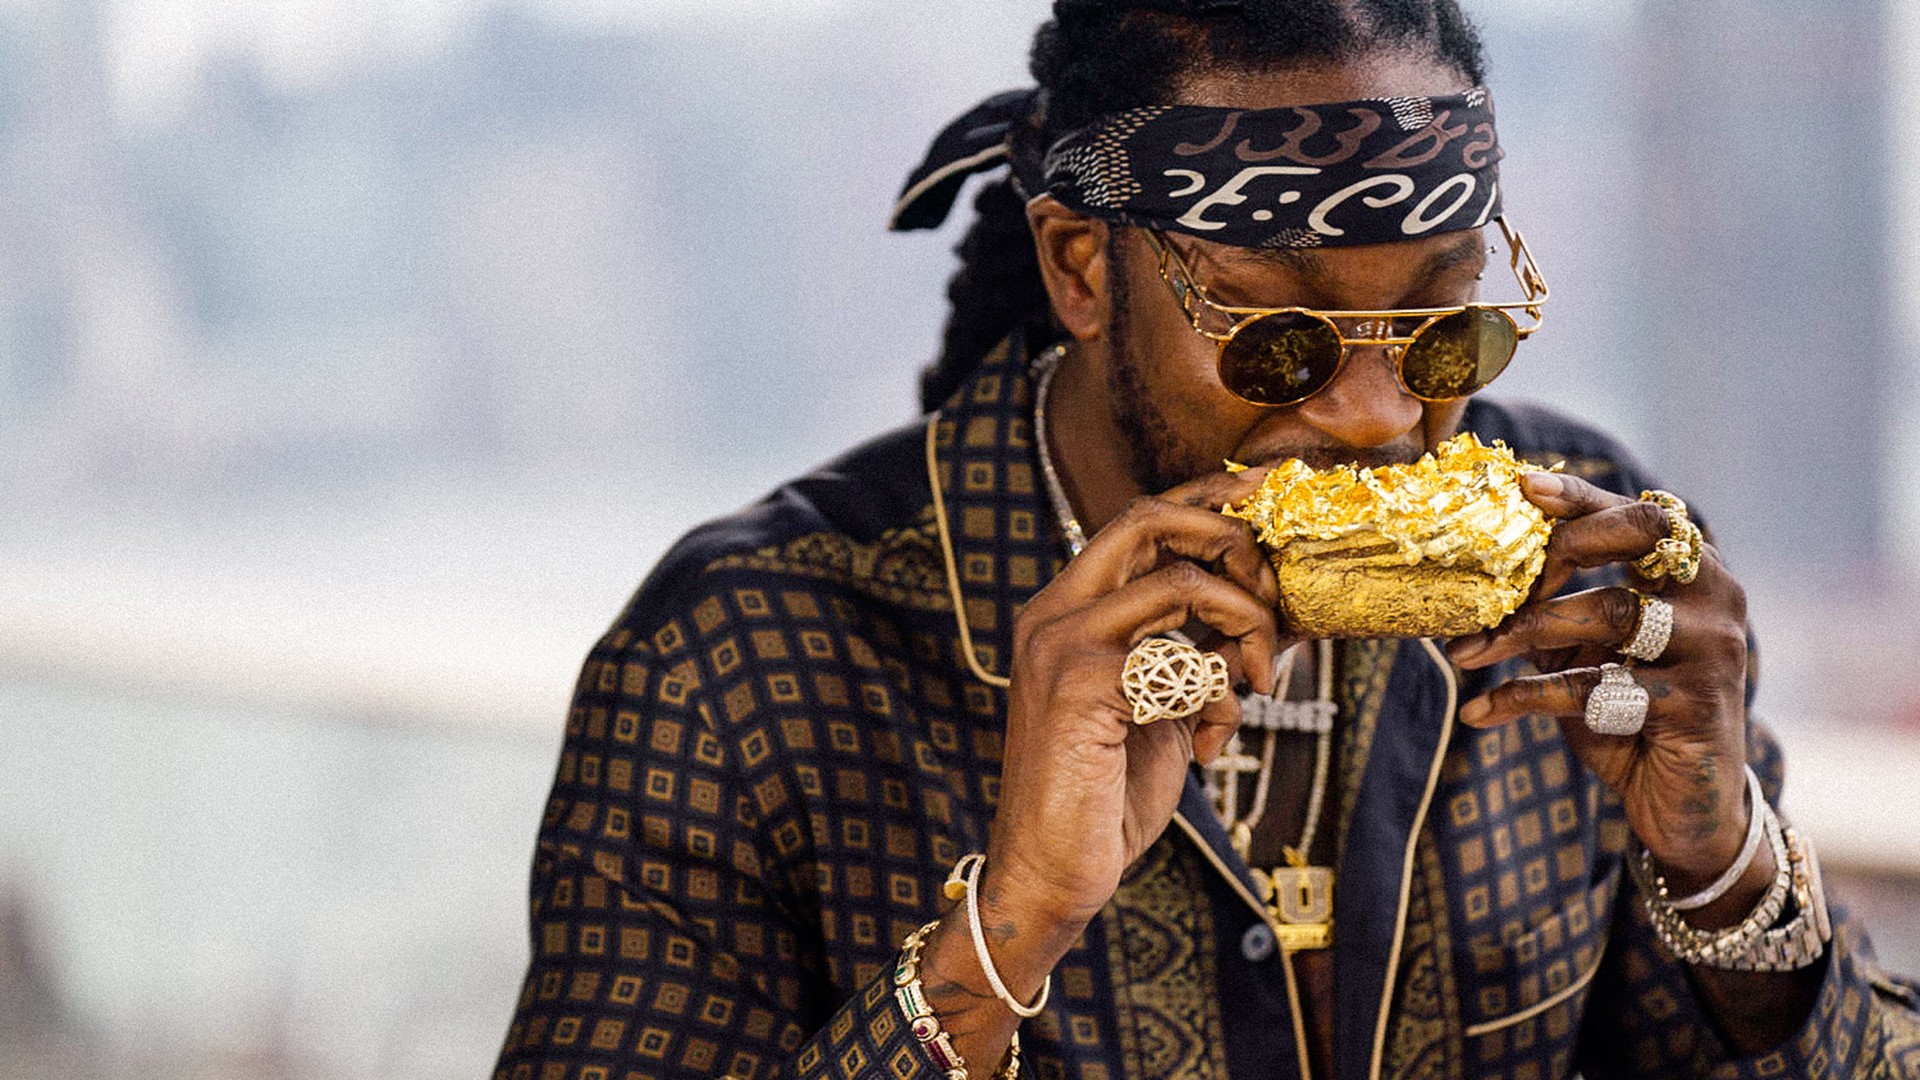 Let's Take a Moment to Appreciate 2 Chainz's Gucci Denim Jacket